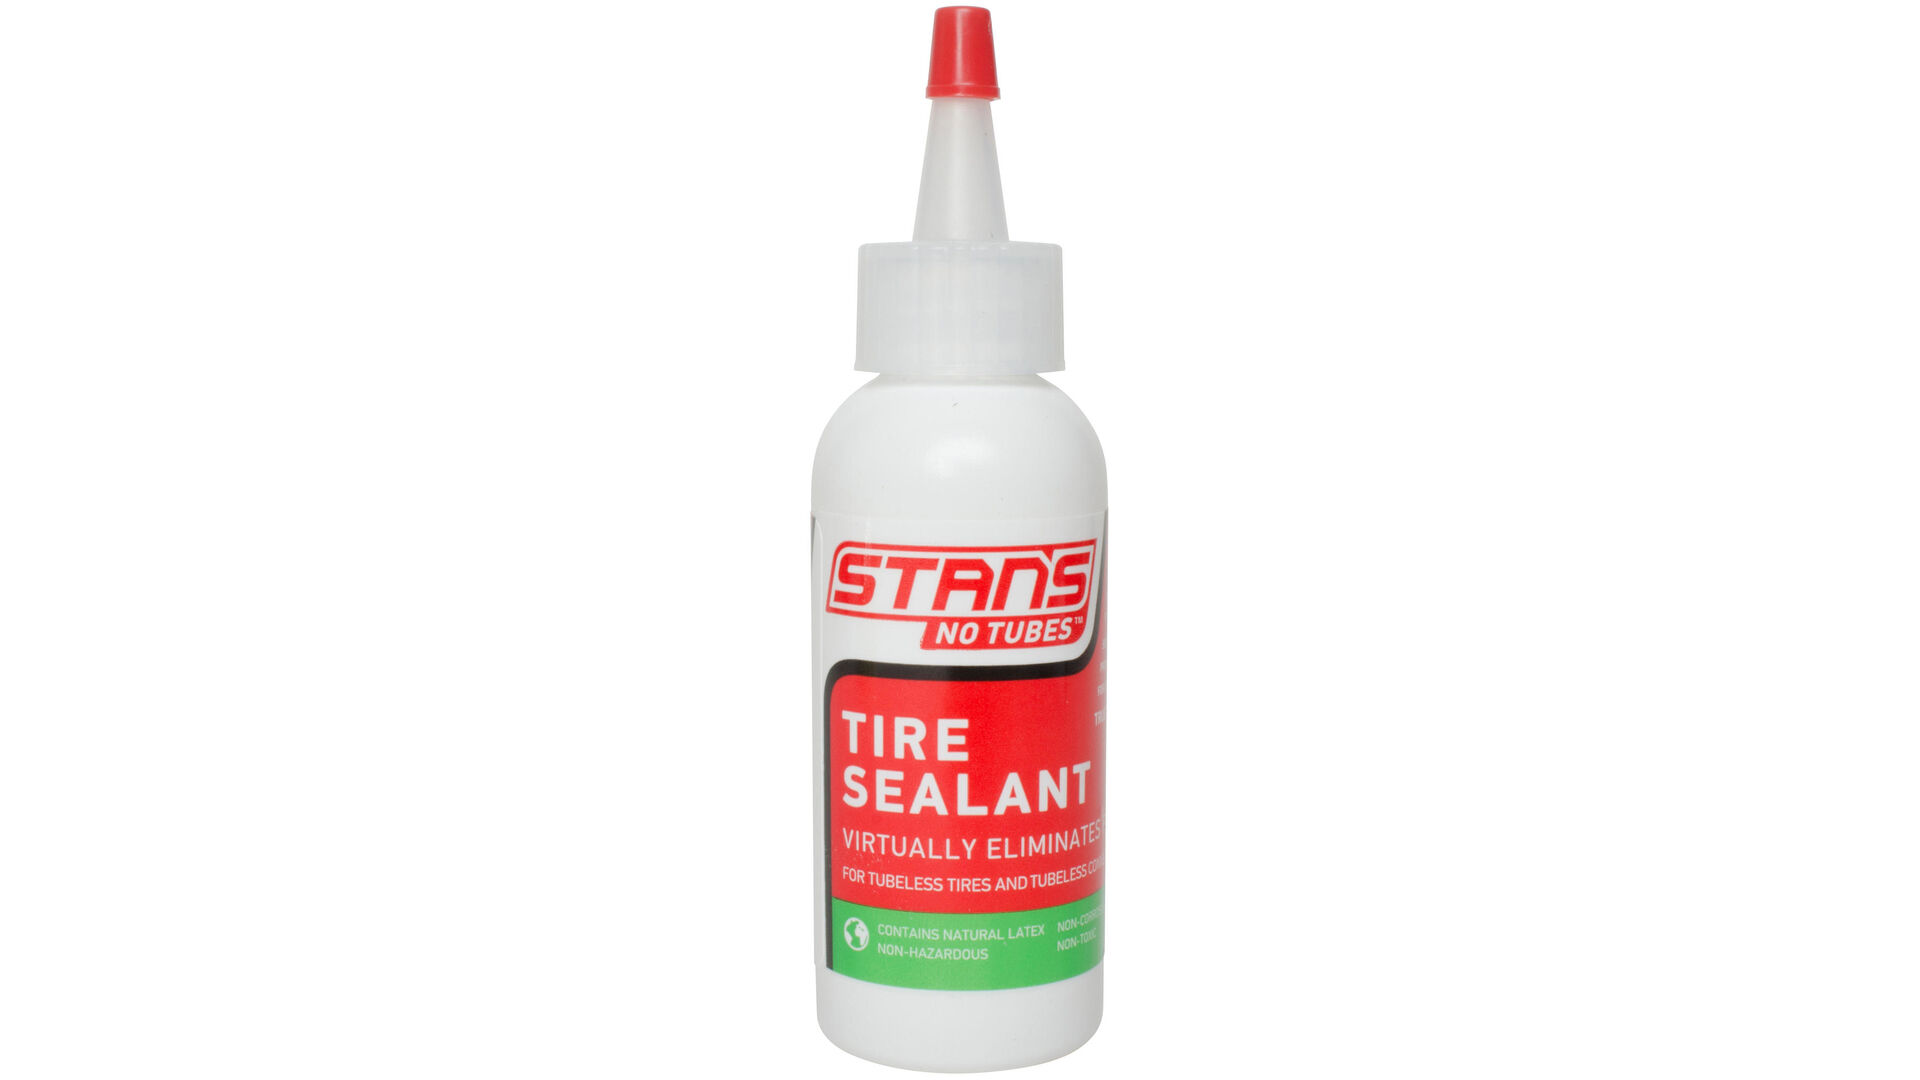 Stan's NoTubes Reifendichtmittel Sealant